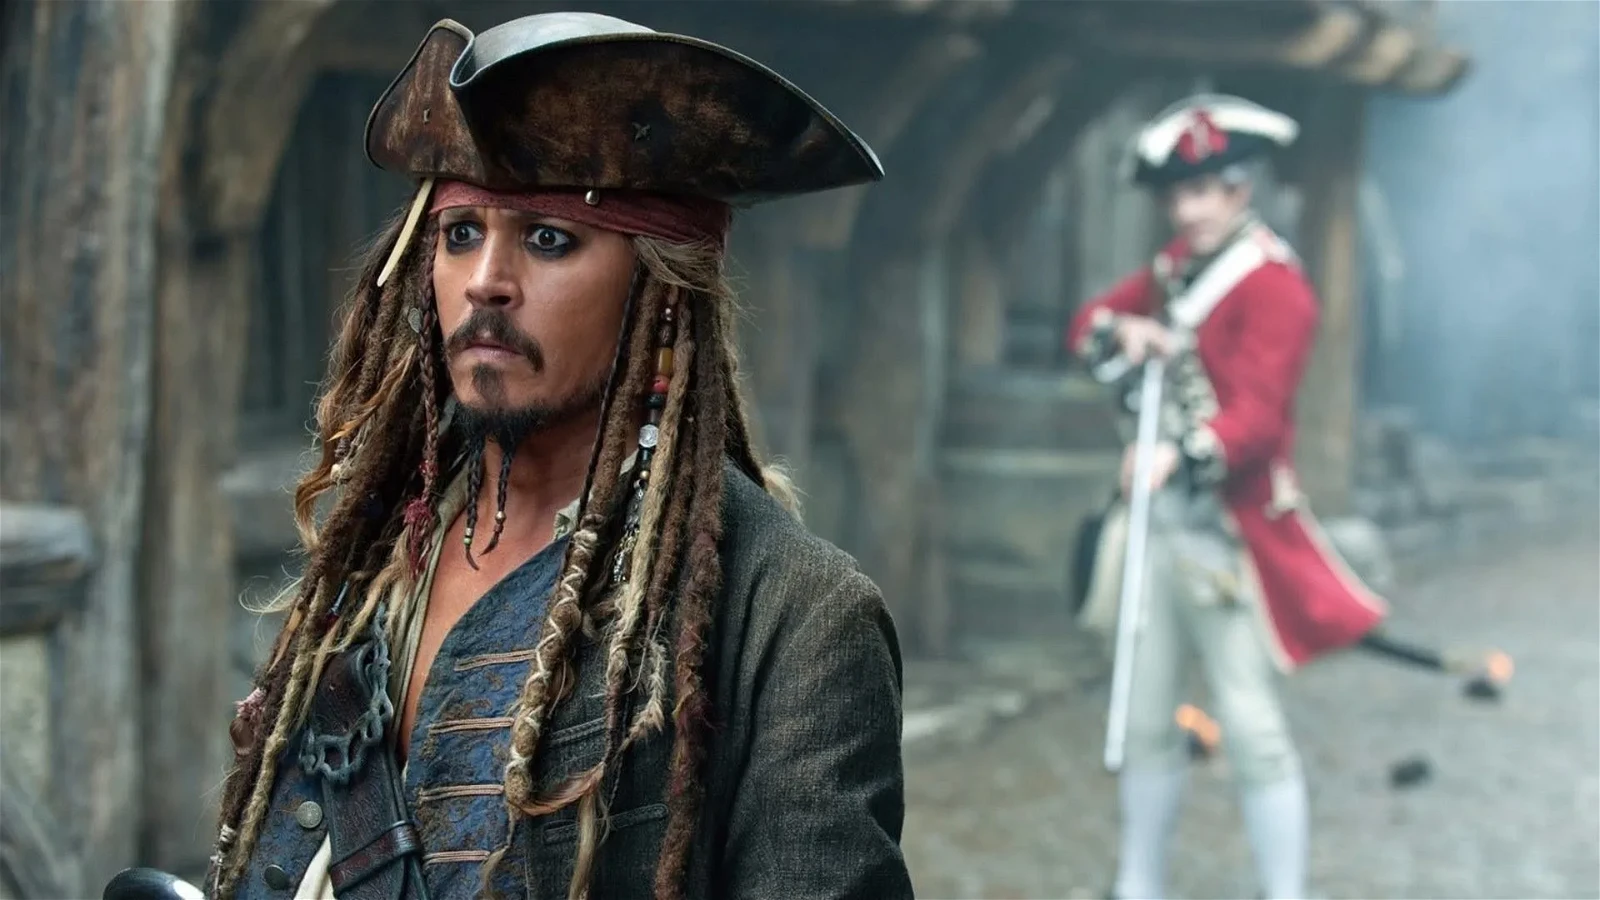 Pirates of the Caribbean [Credit: Walt Disney Studios]